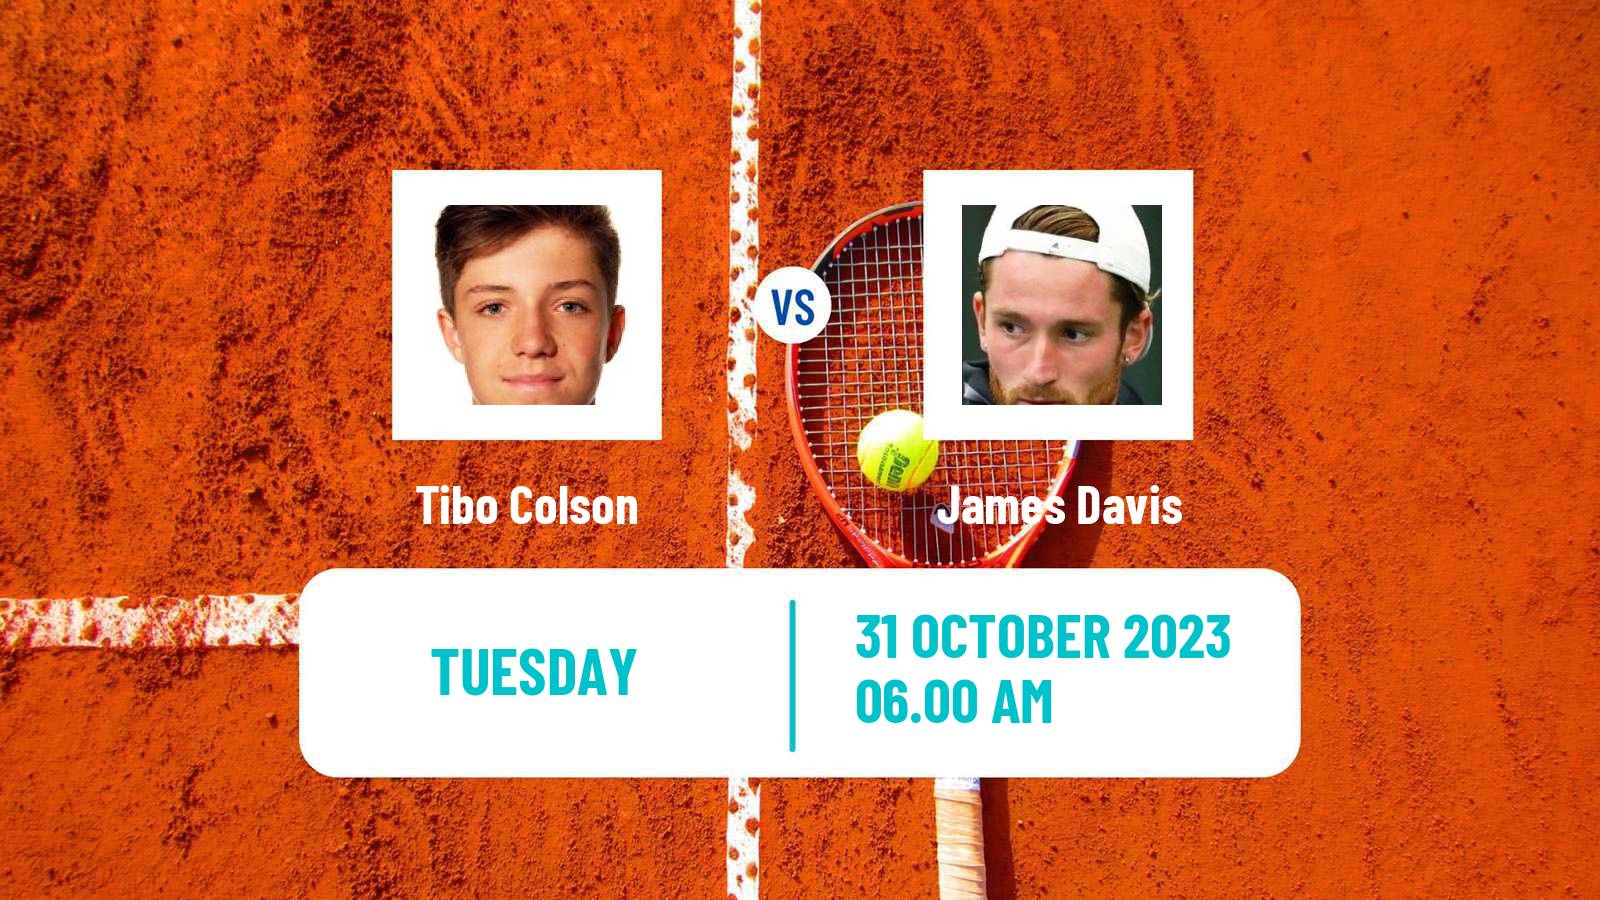 Tennis ITF M25 Sunderland 2 Men Tibo Colson - James Davis